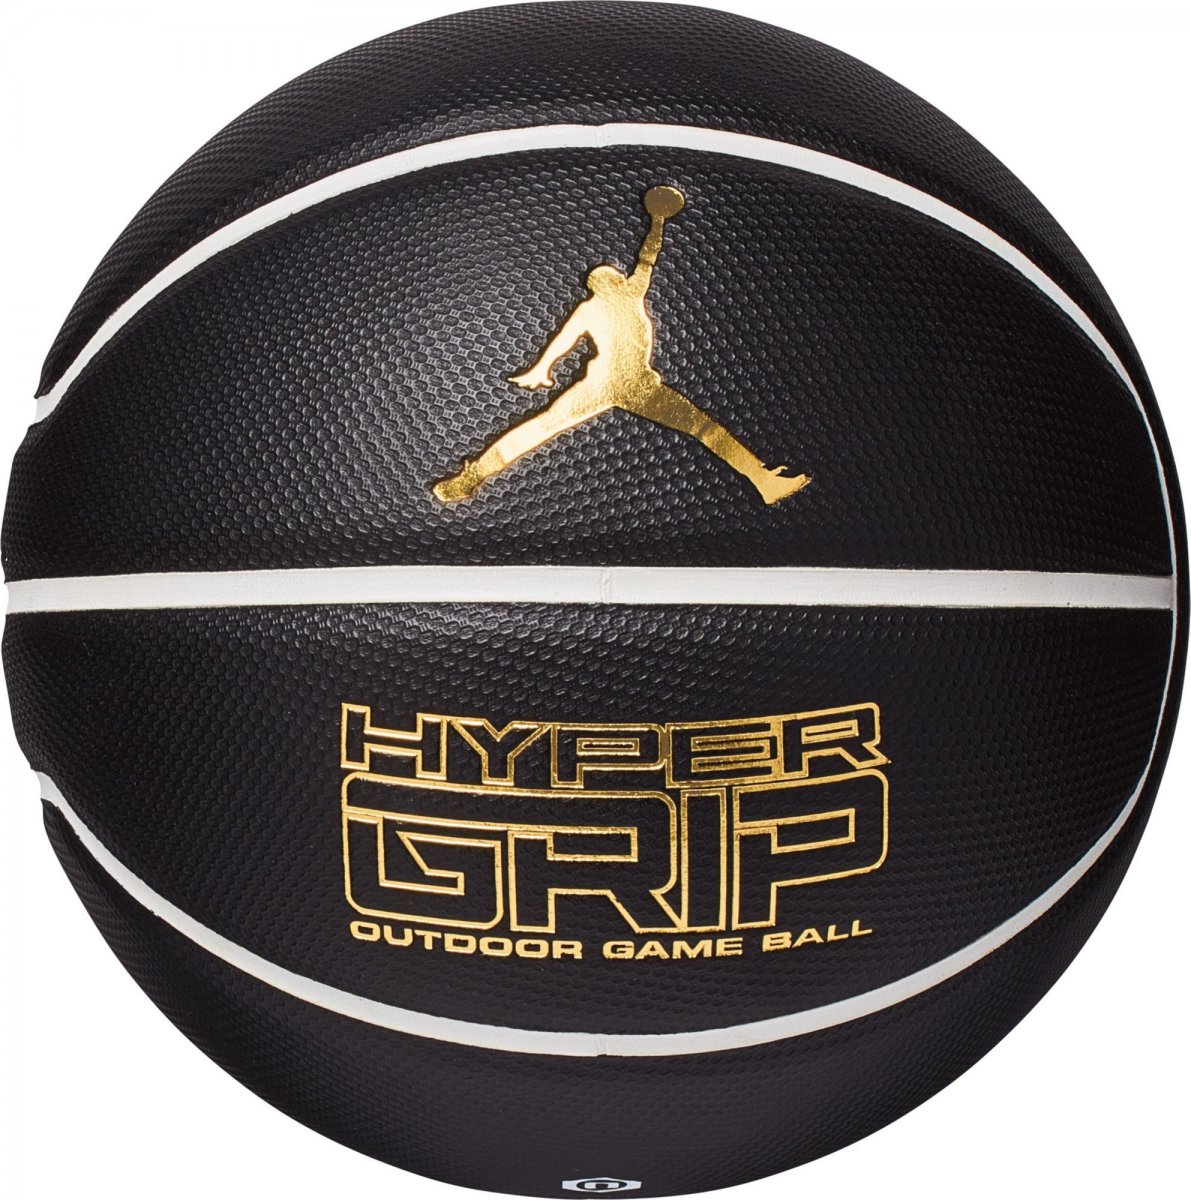 Мяч баскетбольный Jordan Hyper Grip